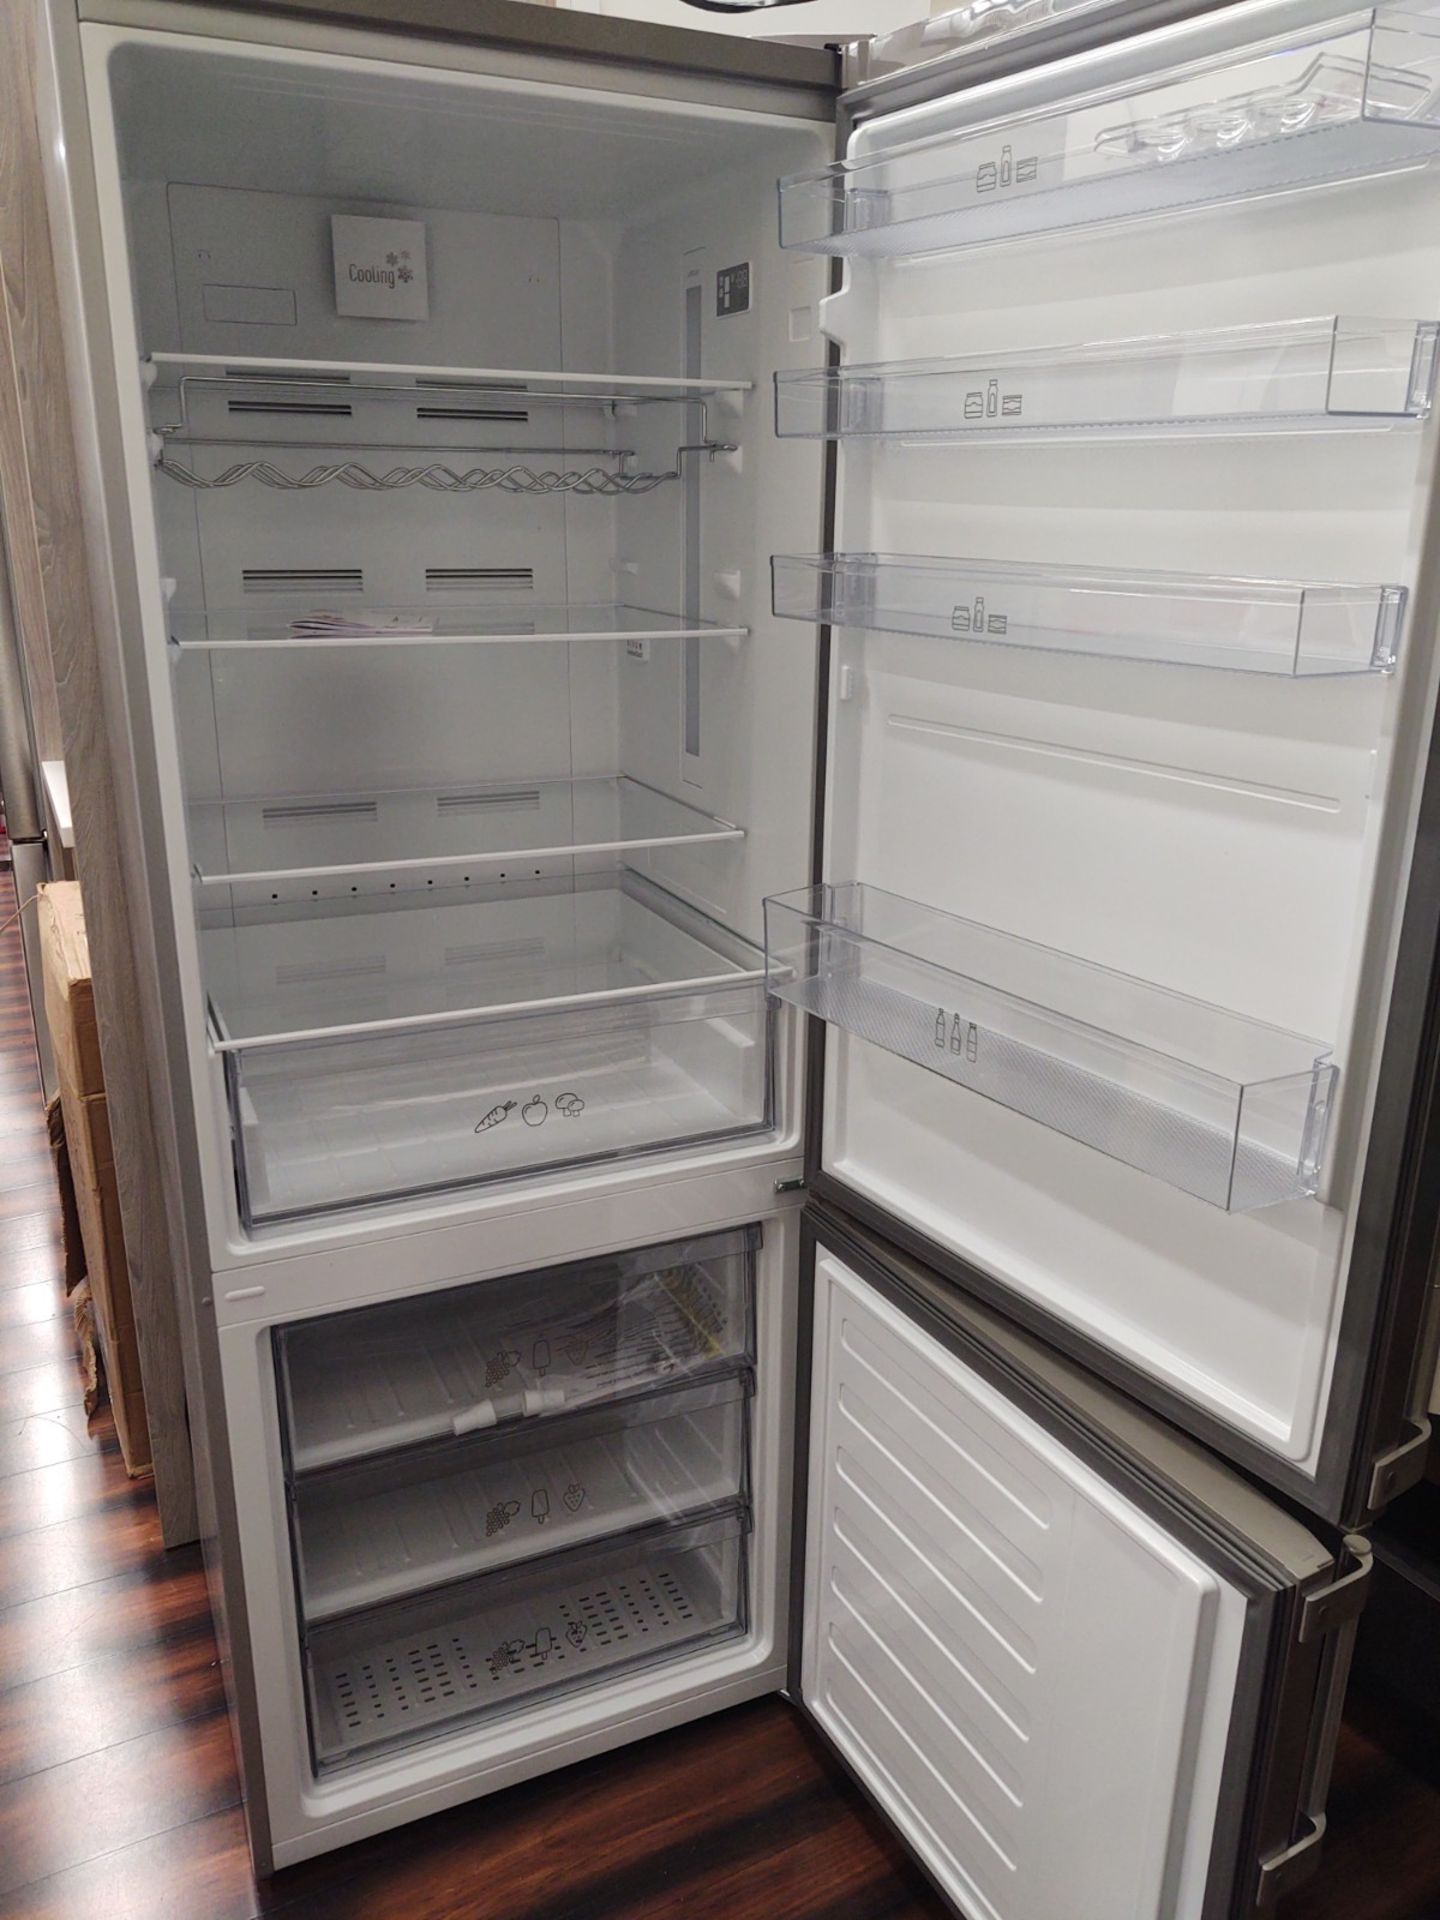 Blomberg Refrigerator Freezer #BRFB 15 Series, Model 7, 27"W Stainless Steel Finish, Bottom Freezer - Image 3 of 3